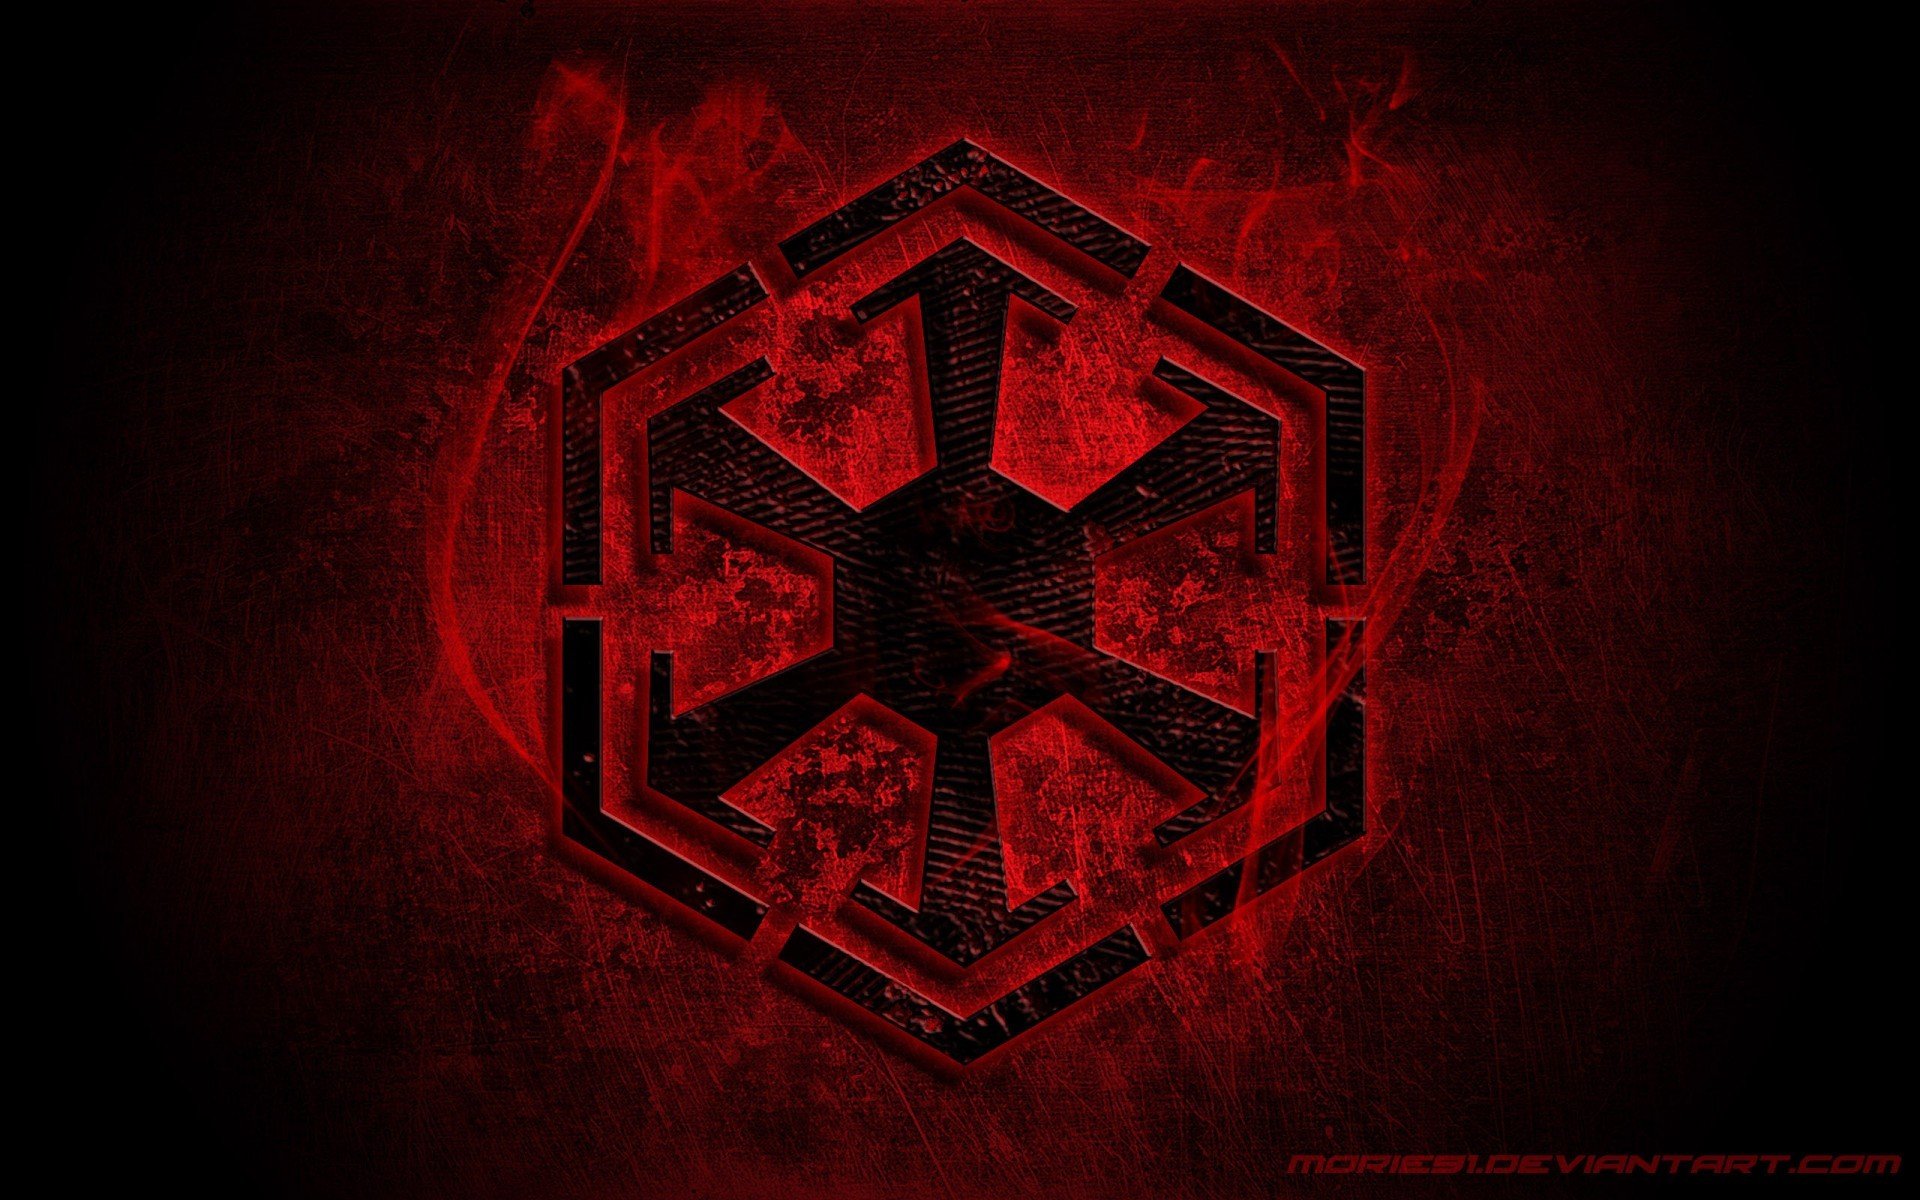 Star wars the old republic Sith logo wallpaper 1920x1200 590331 1920x1200